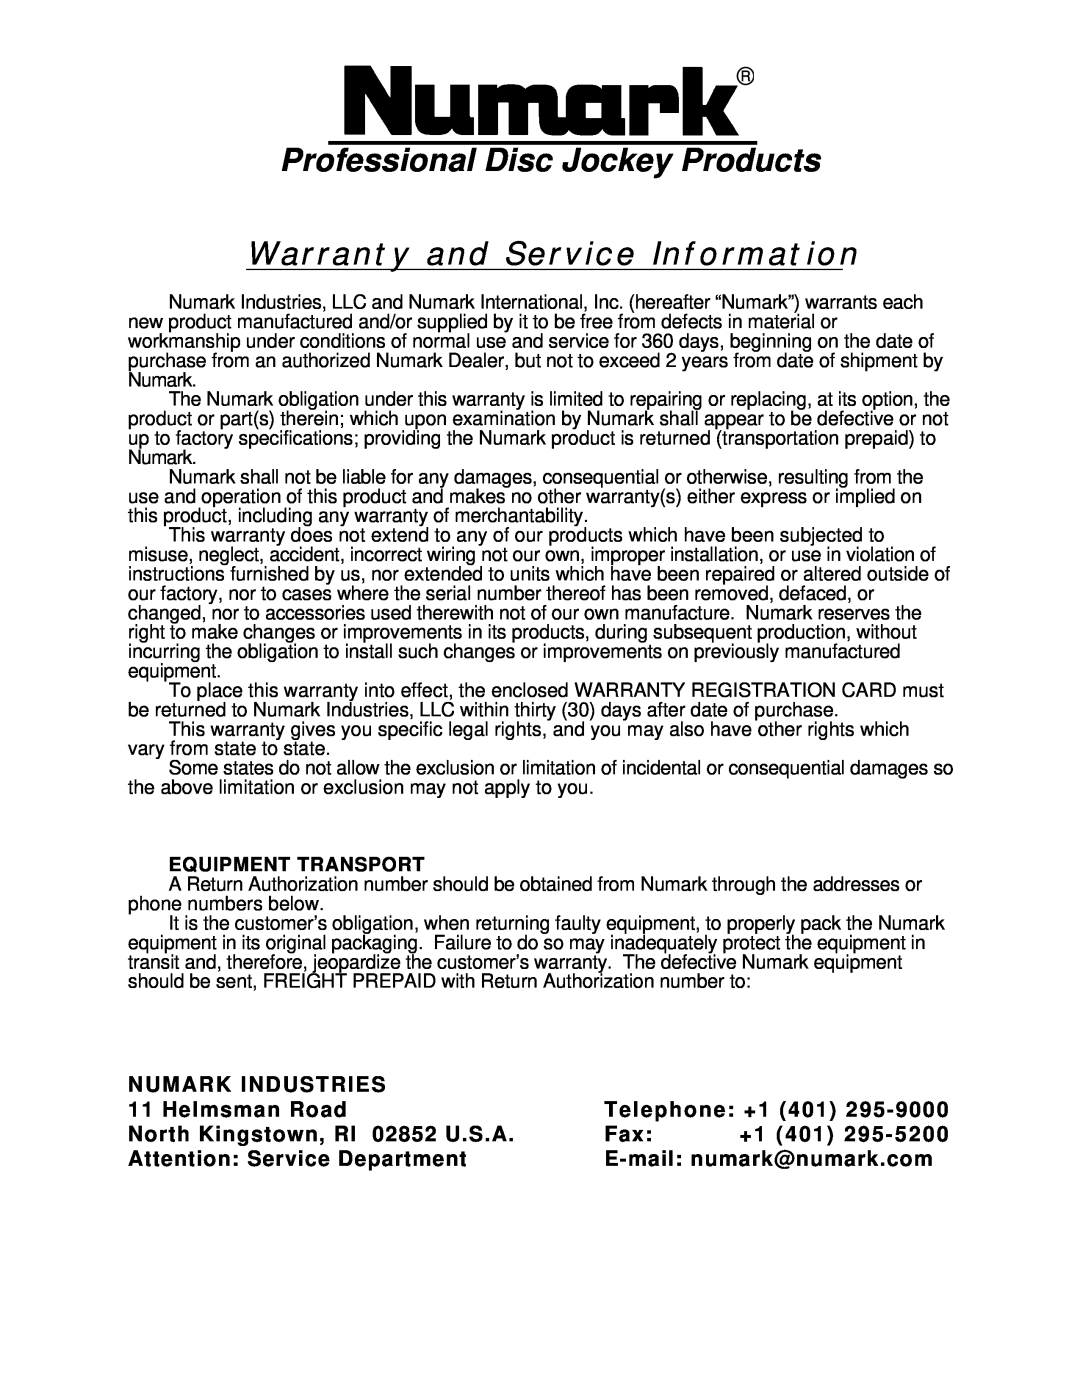 Numark Industries CDN-12 manual Helmsman Road, Telephone +1, North Kingstown, RI 02852 U.S.A, Attention Service Department 